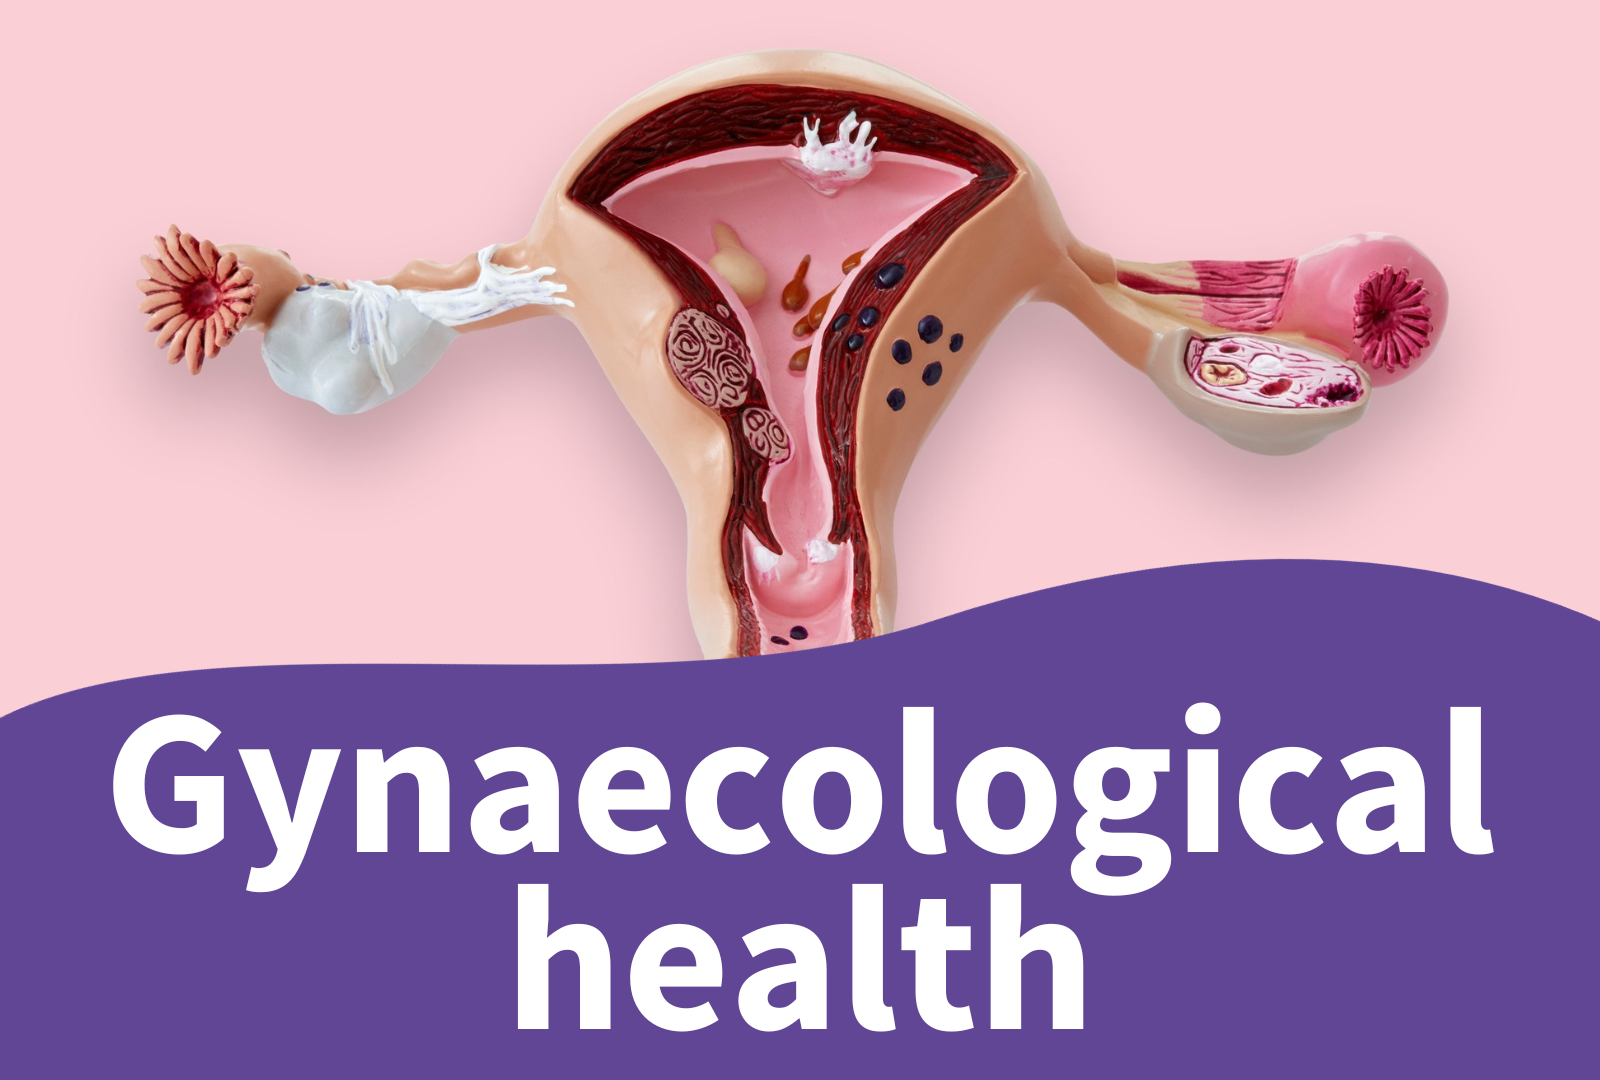 Gynaecological health